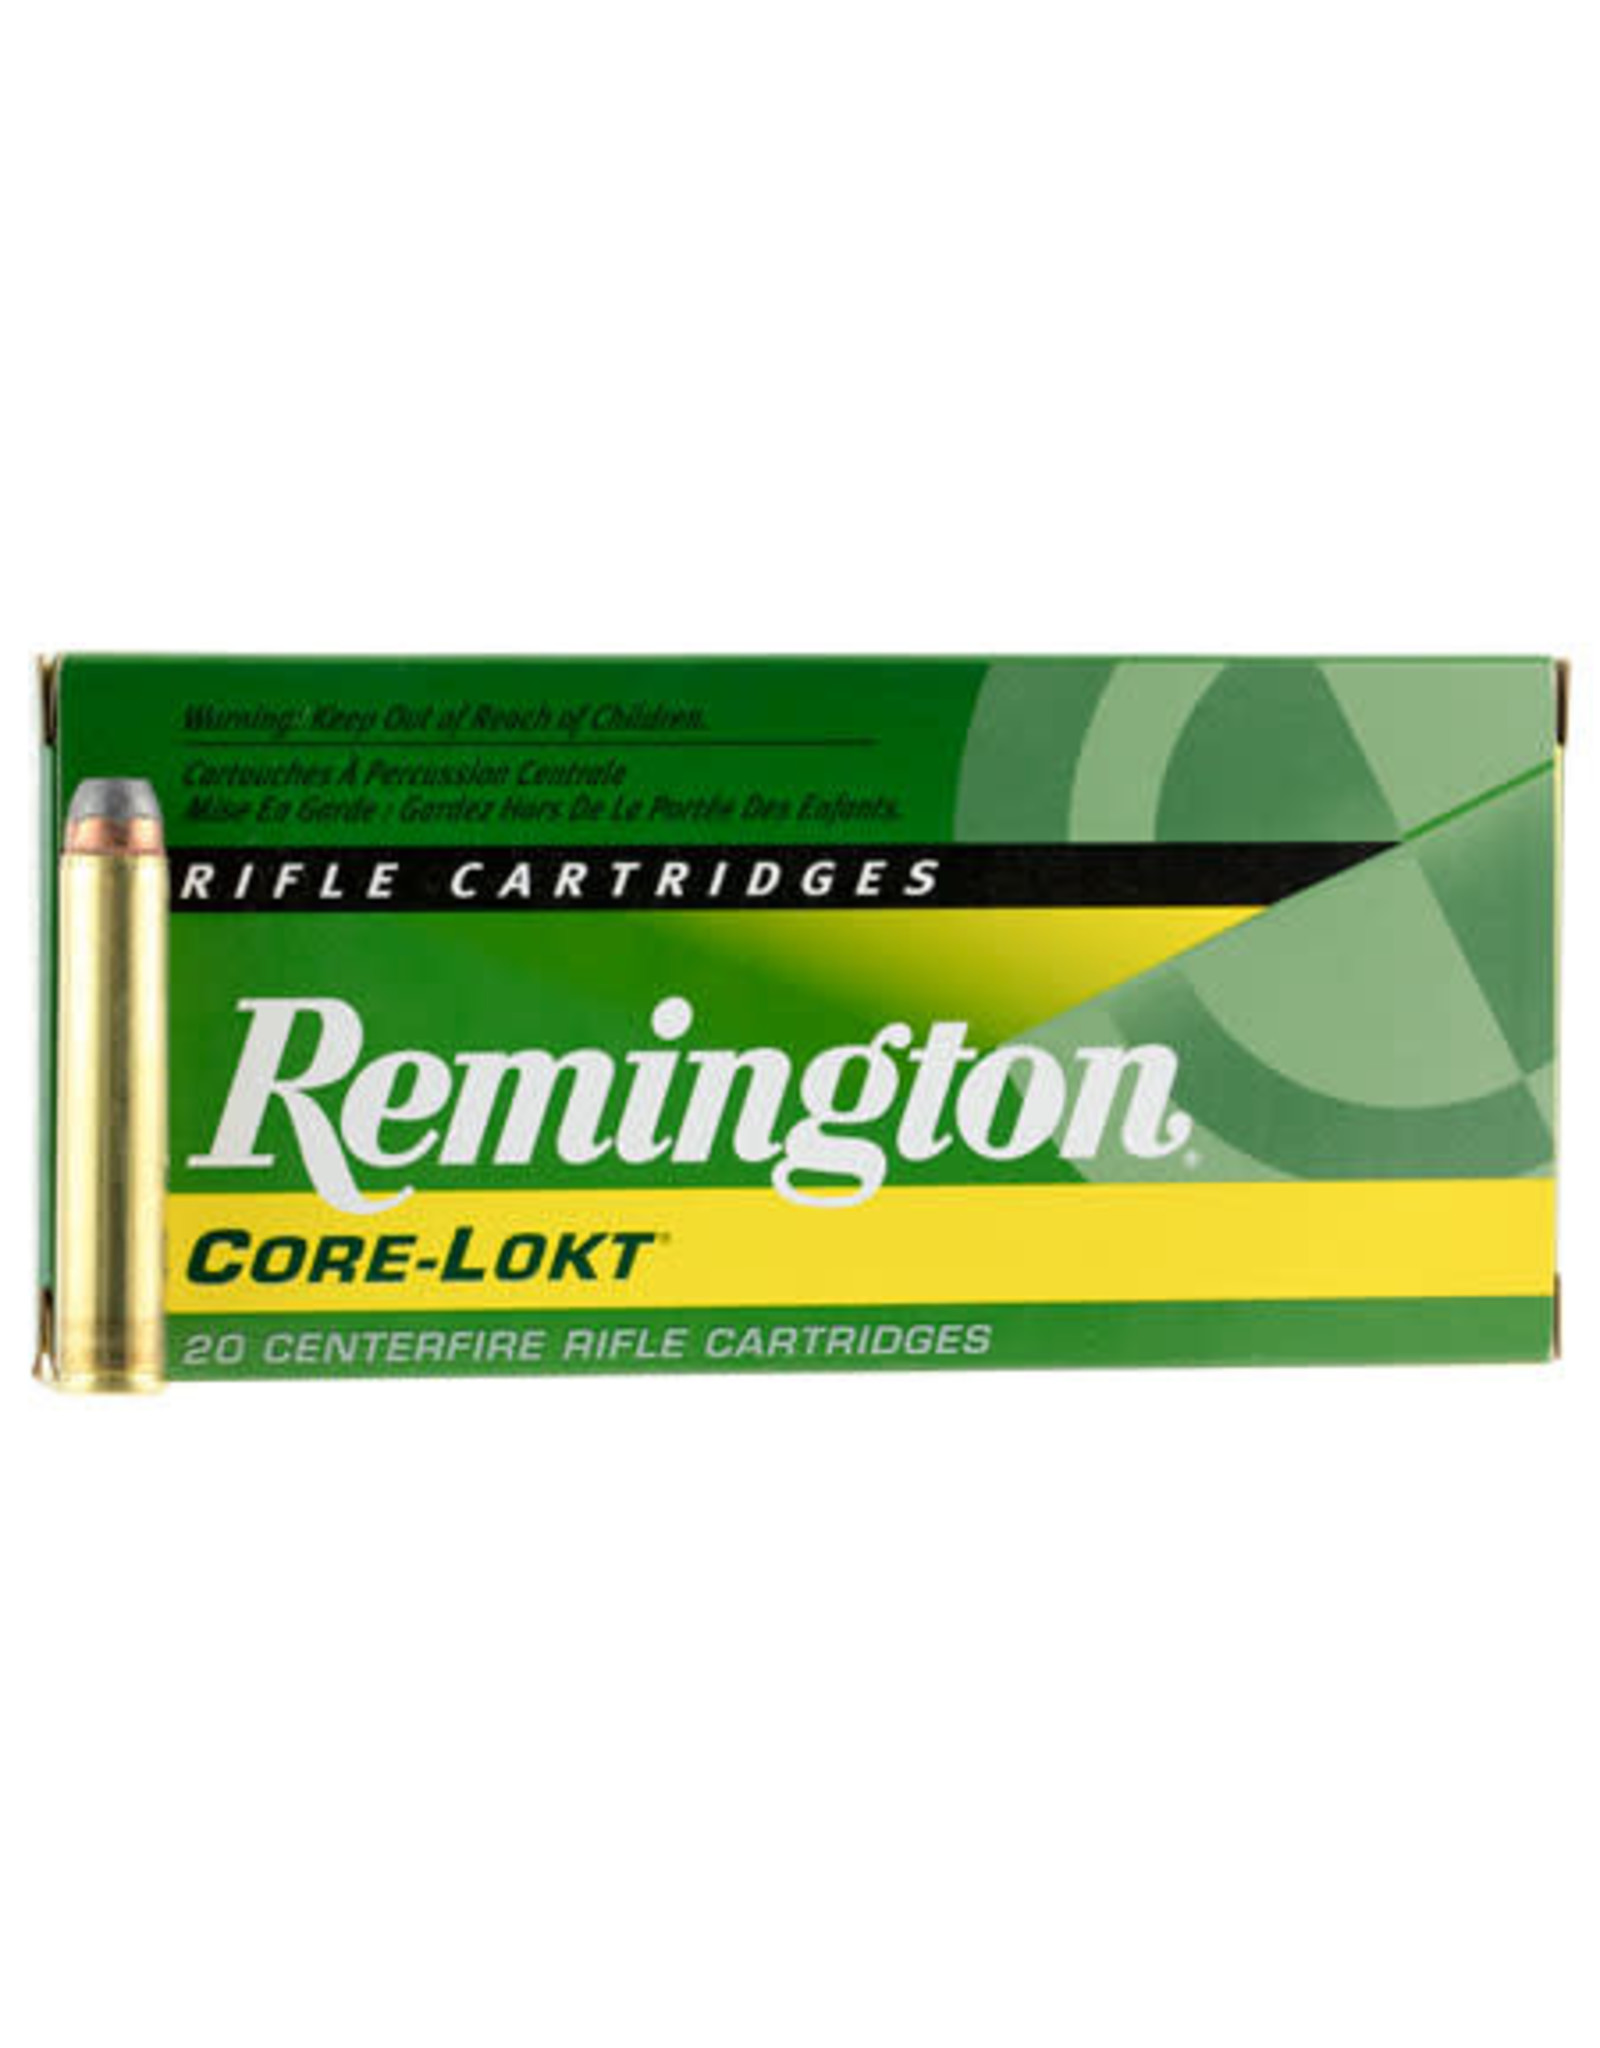 REMINGTON Remington .444 Marlin 240 Gr SP - 20 Rounds